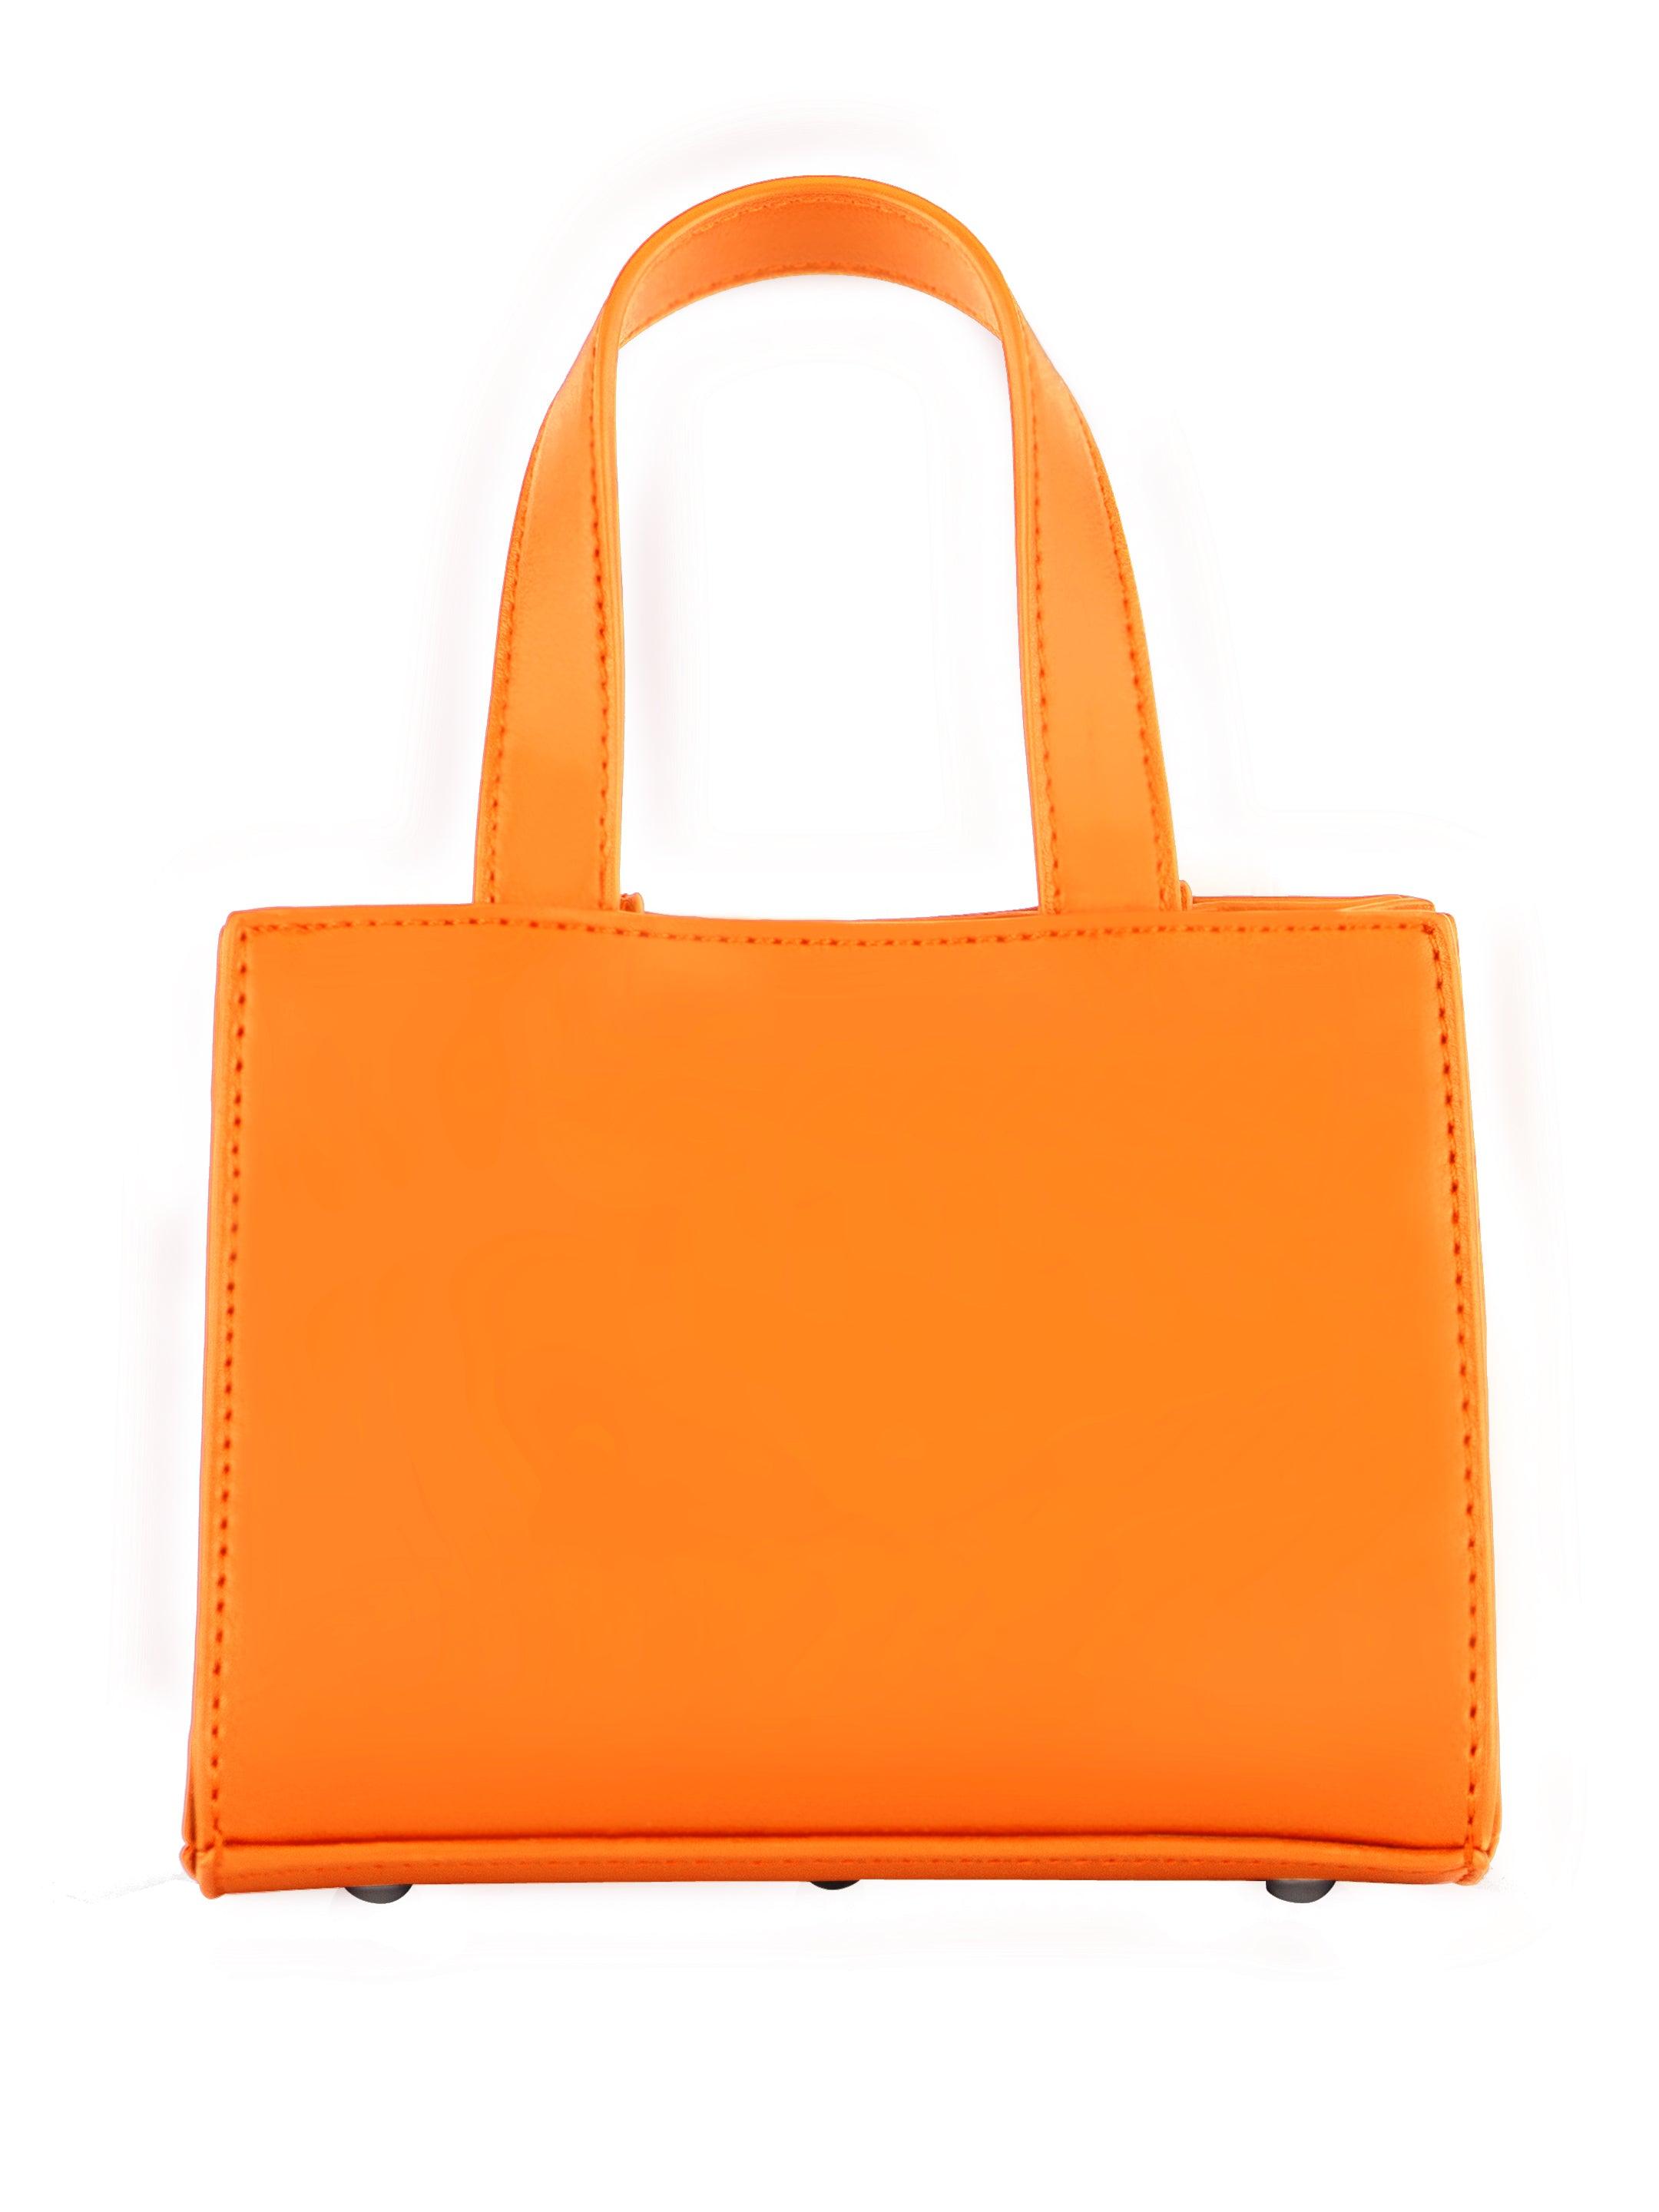 Buy The Elizabeth Hand Bag - Tangerine - A Stylish Leather Accessory –  Espora Bags (Espora Exportaciones S.L)